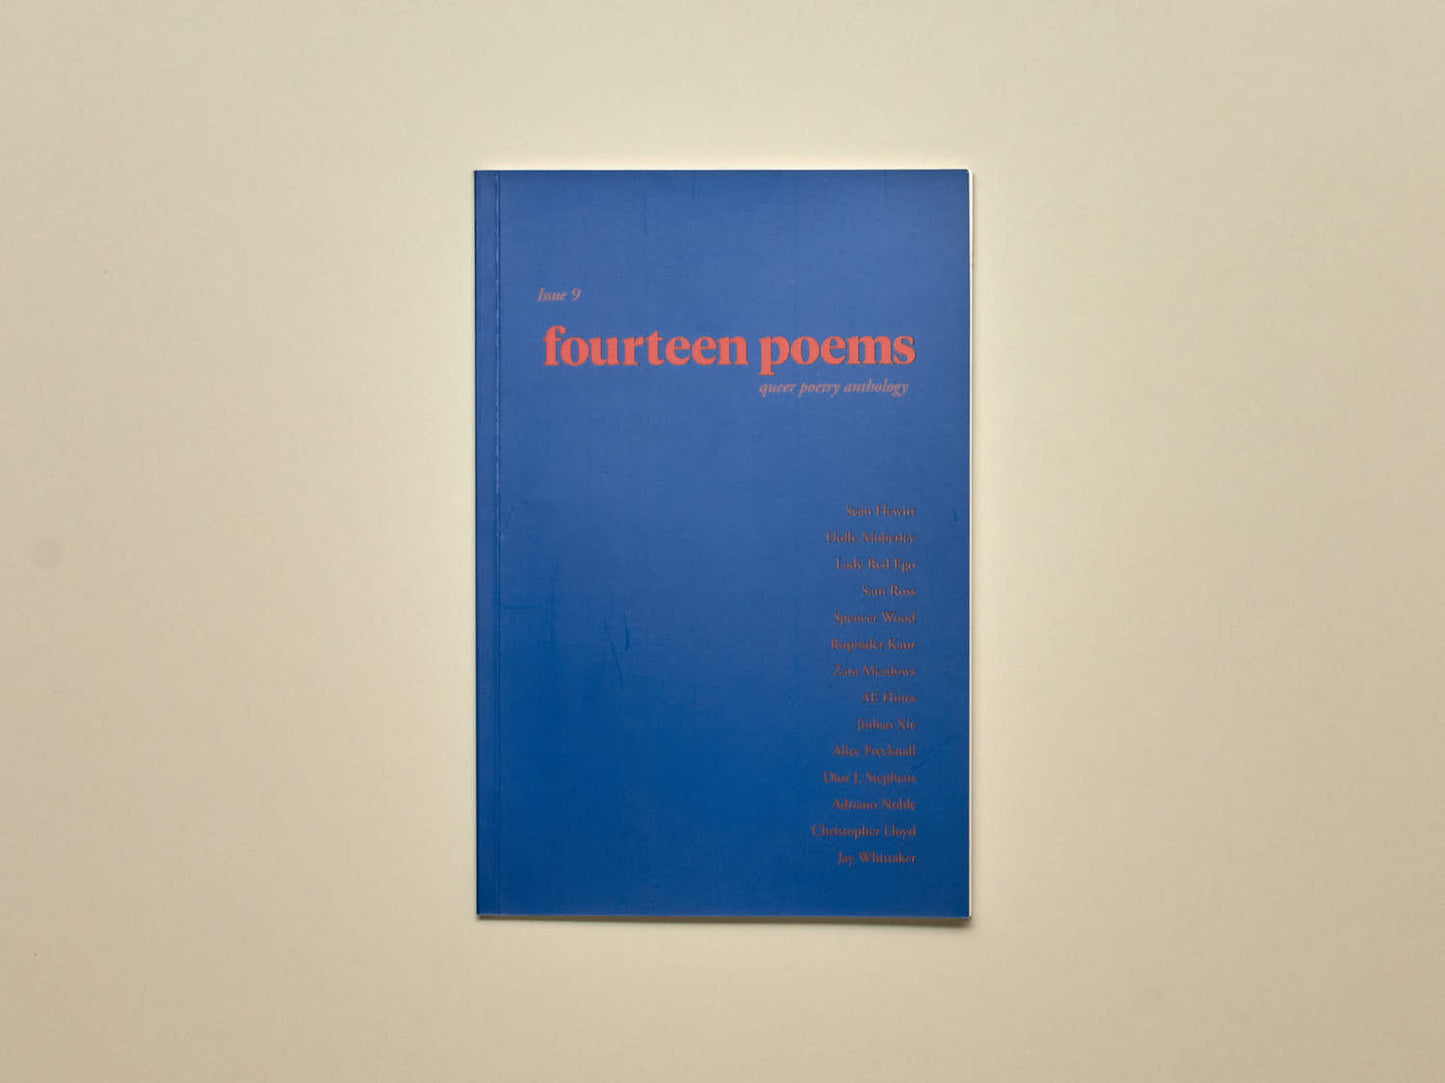 Fourteen Poems Issue 9